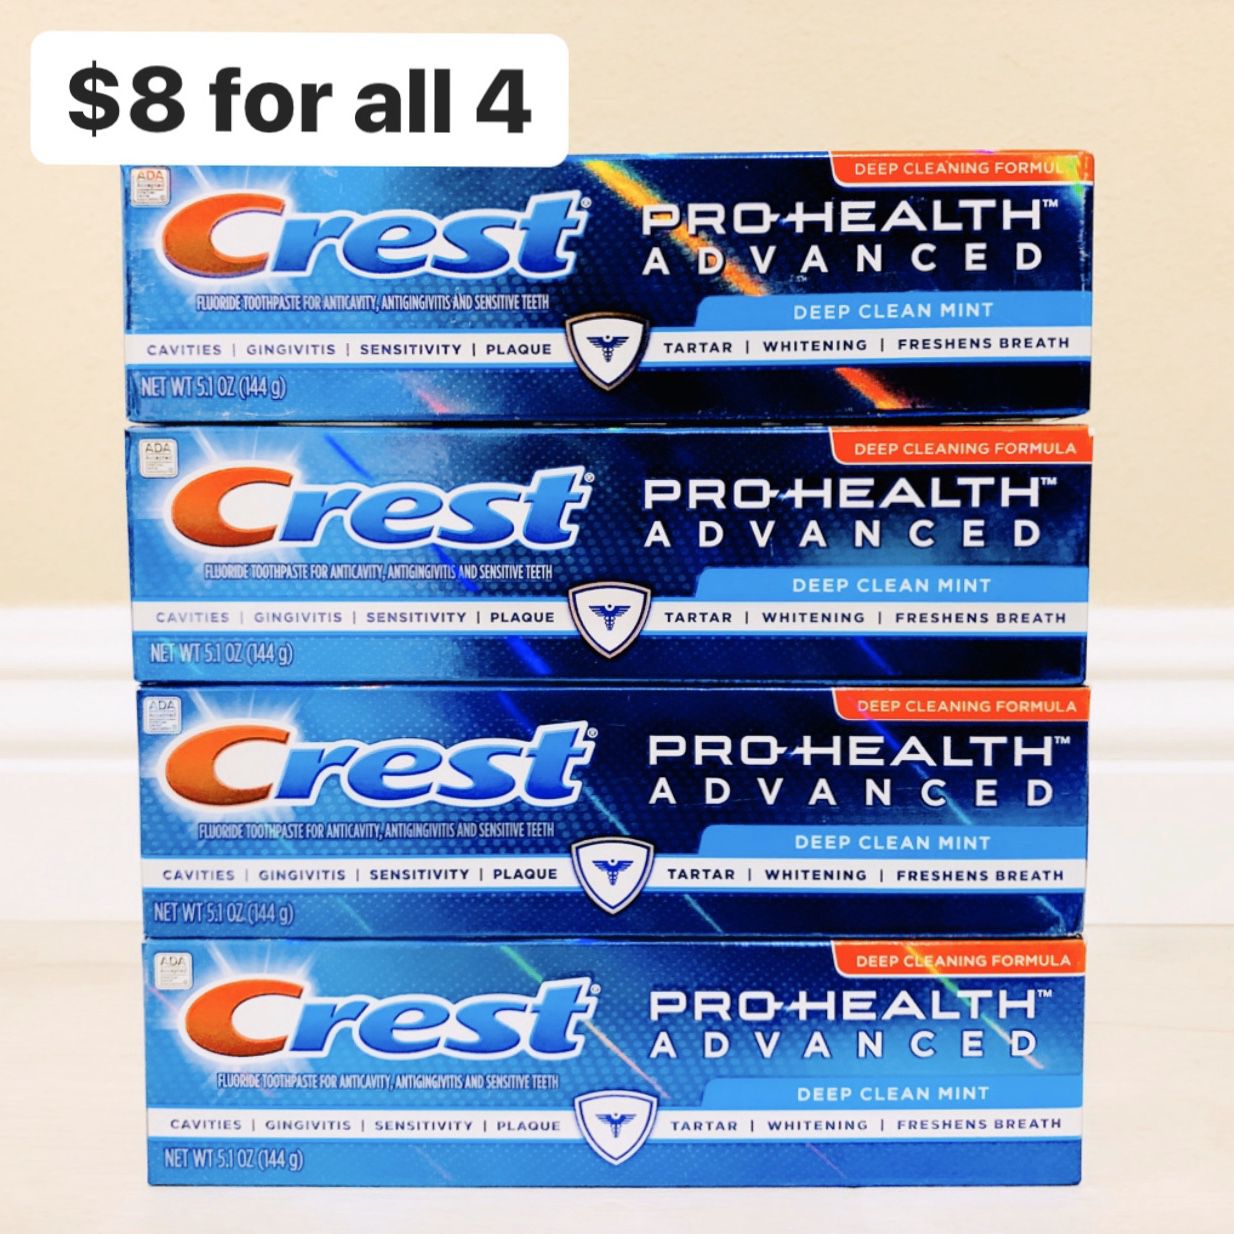 4 Crest Pro-Health Advanced Deep Clean Mint (5.1 oz EA) - $8 for all 4